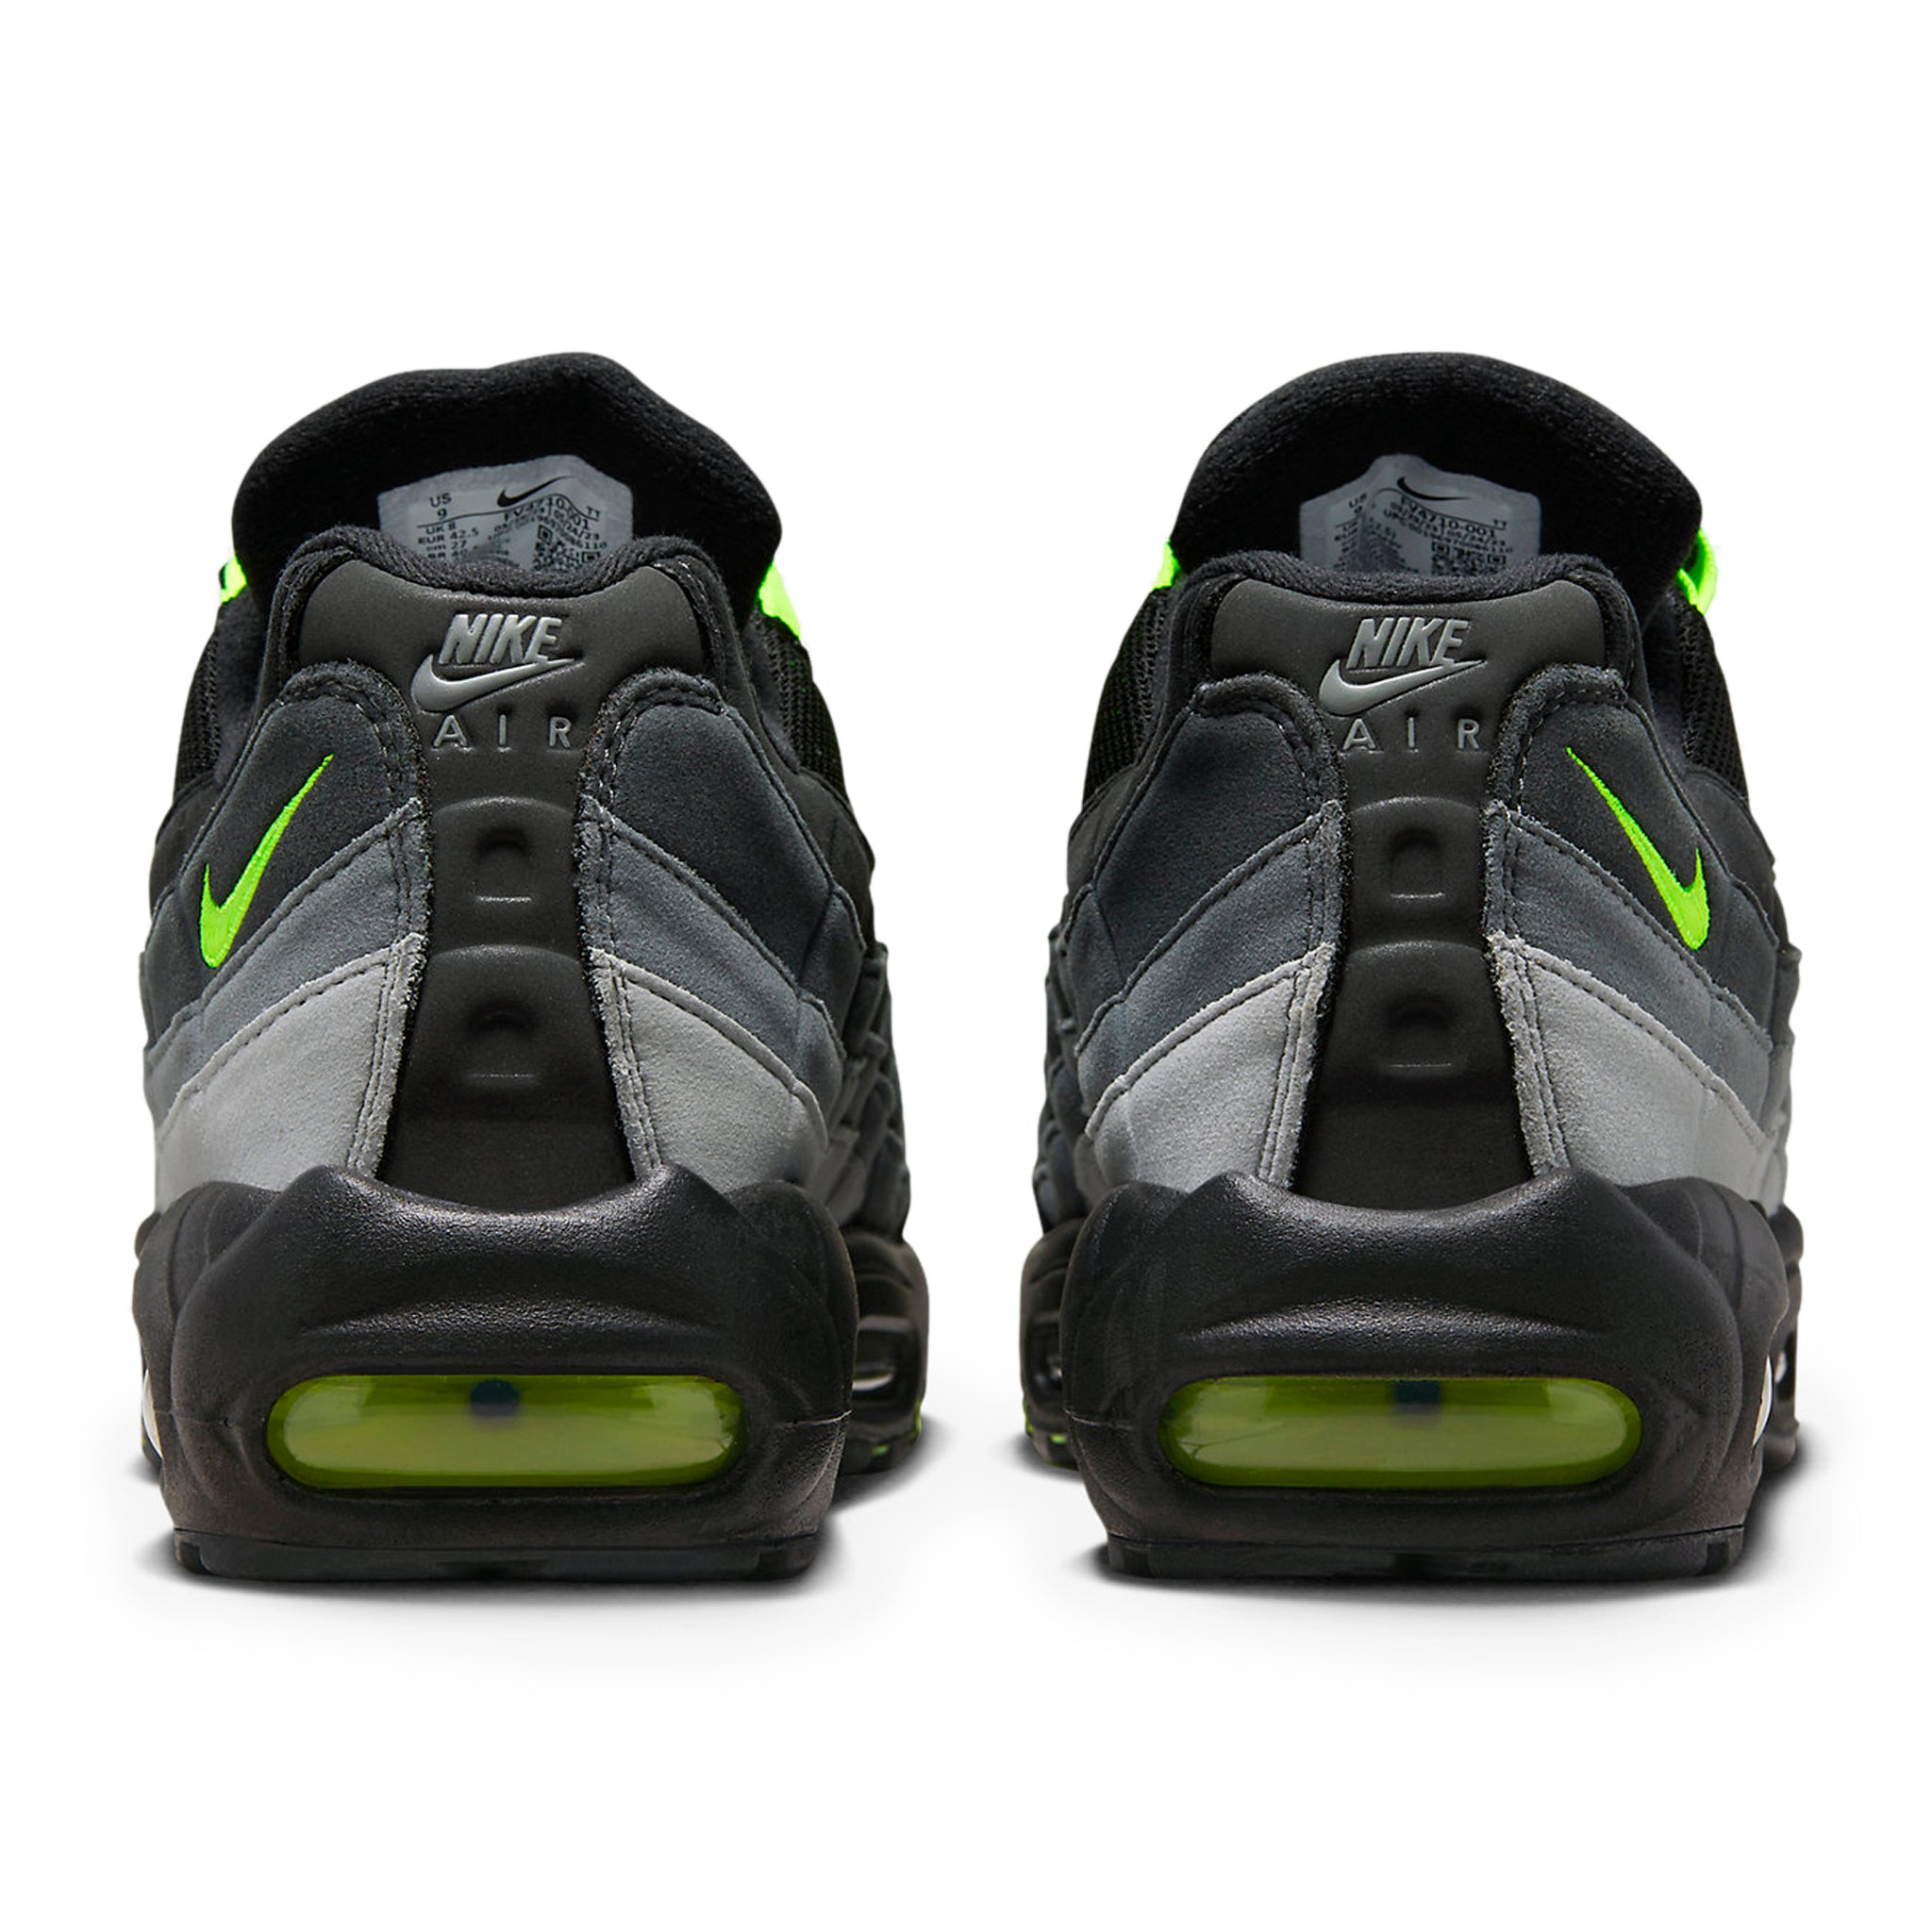 Back view of Nike Air Max 95 Black Neon FV4710-001